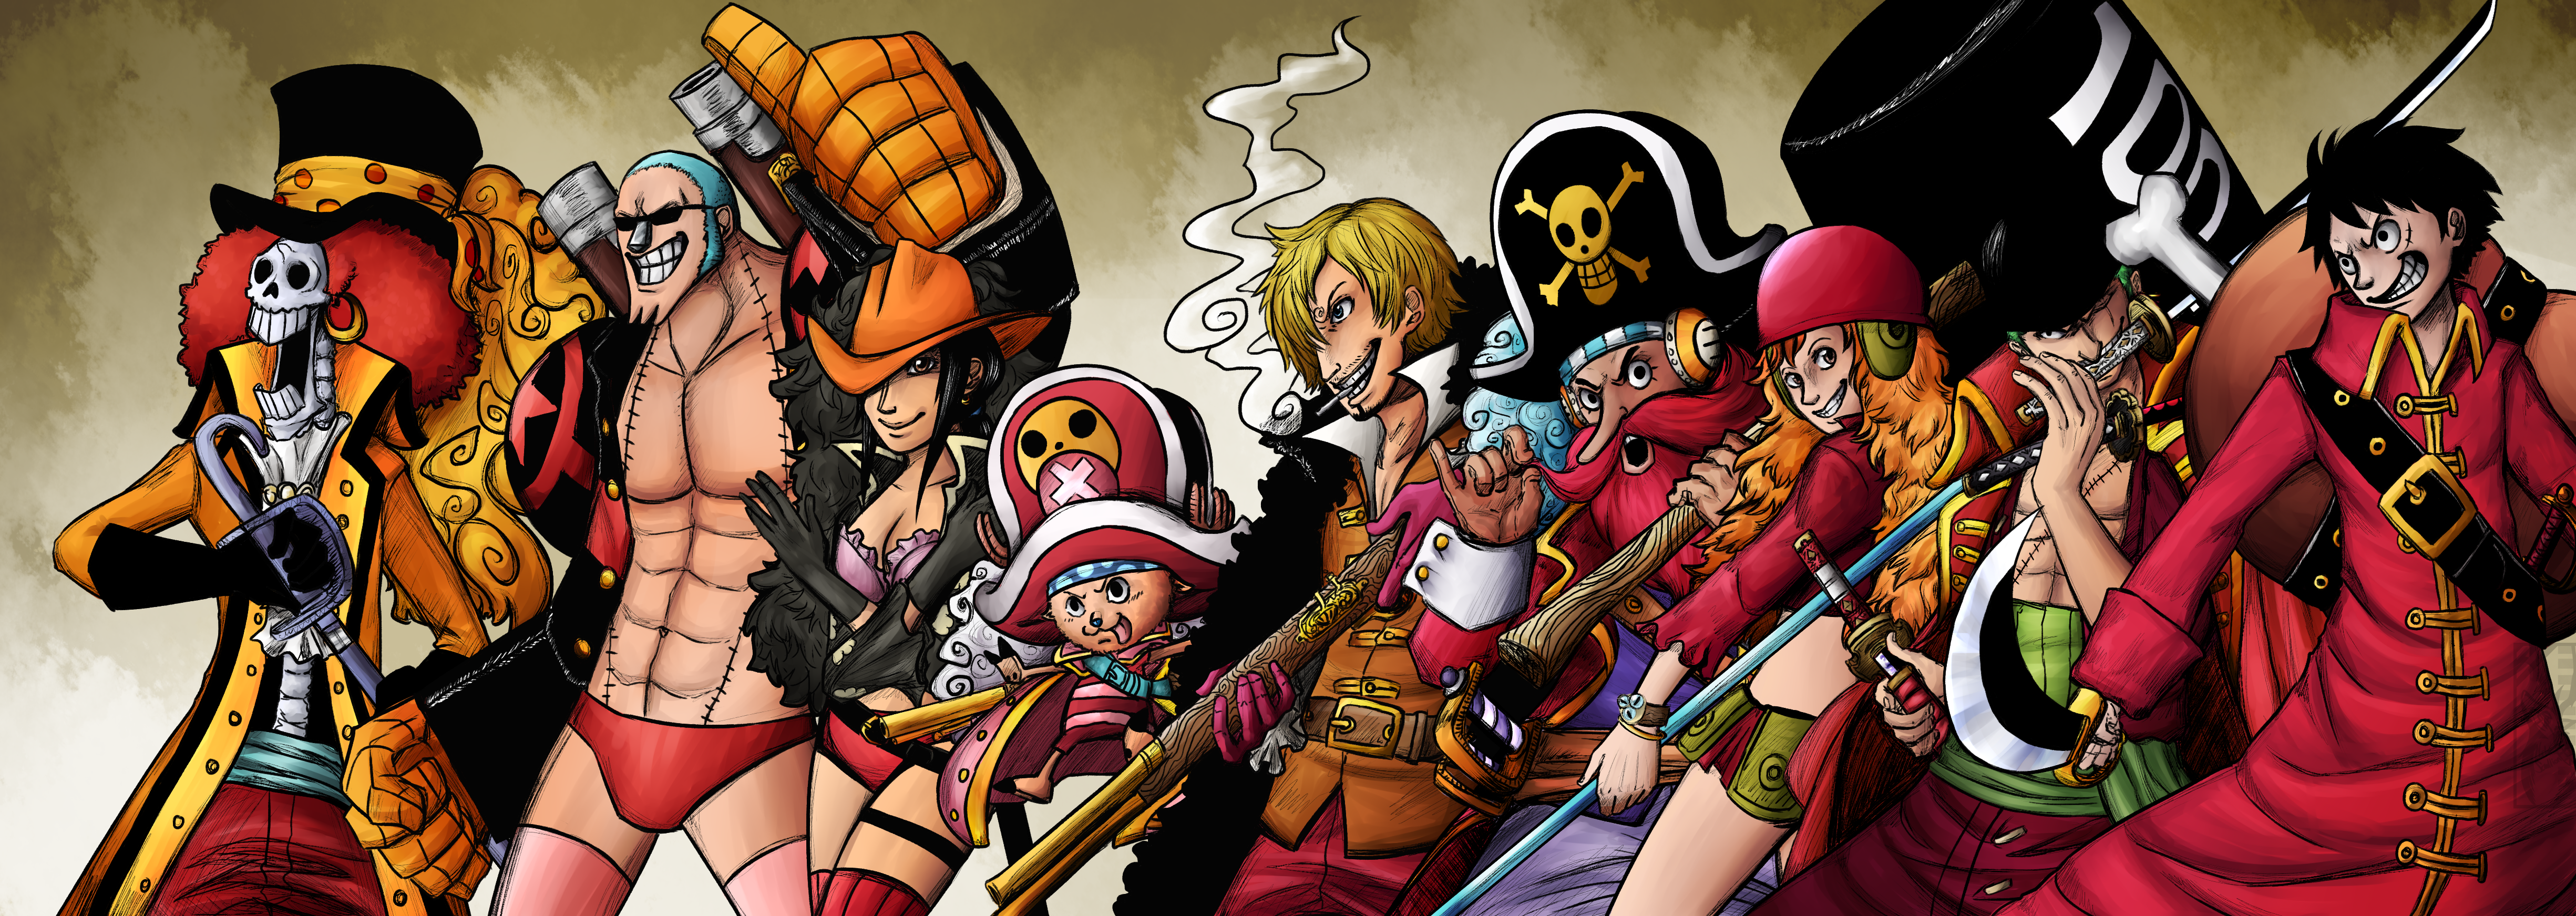 One Piece 957 - One Piece Chapter 957 - One Piece 957 